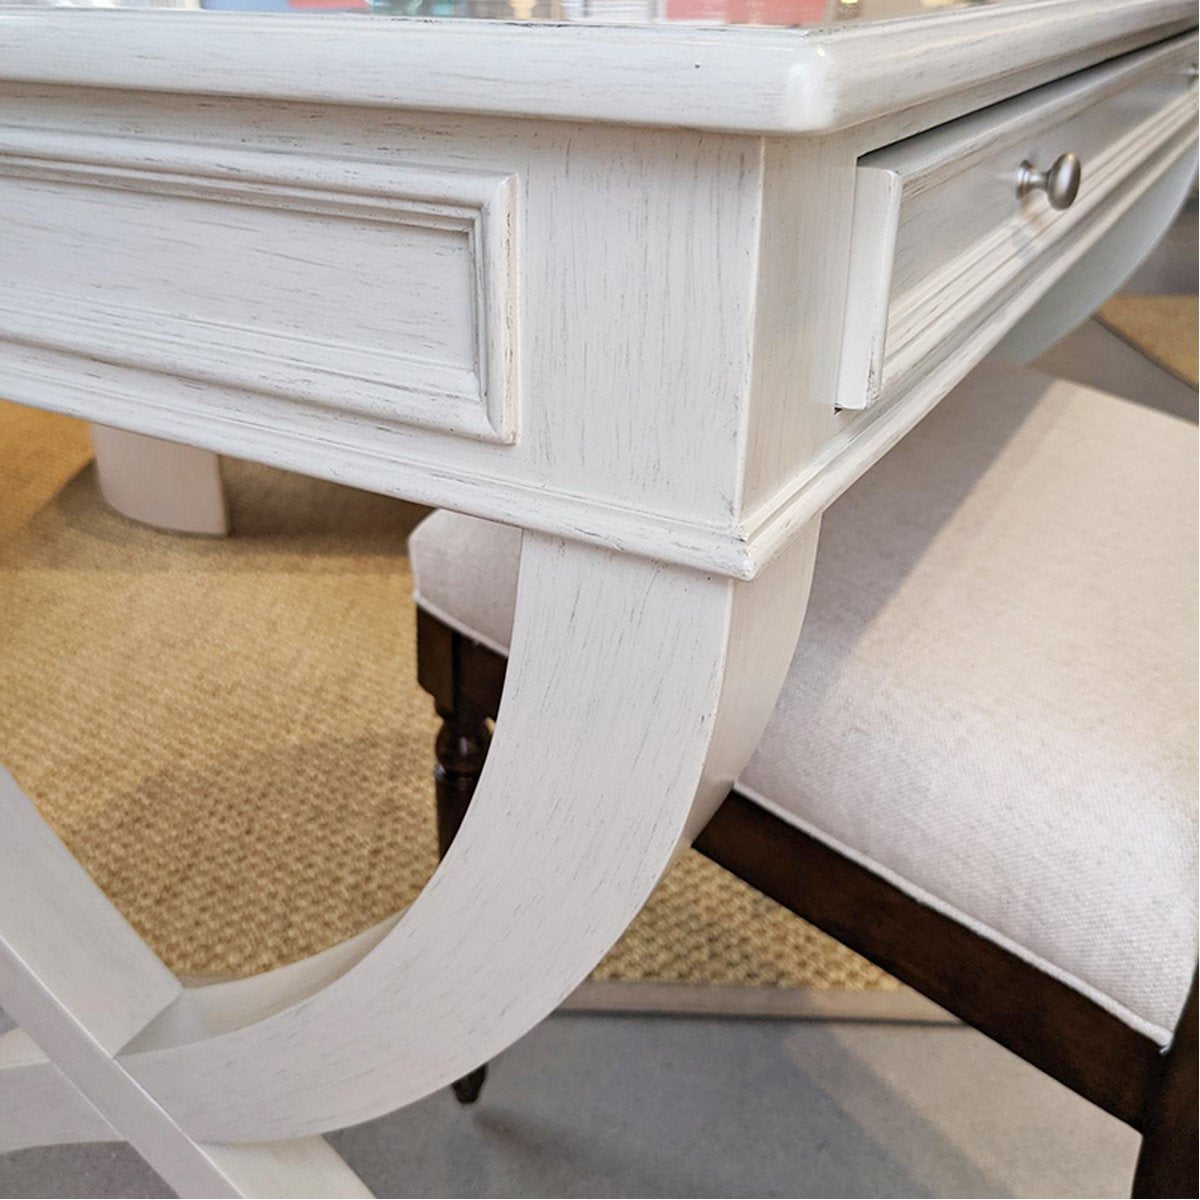 Woodbridge Furniture Bedside Writing Table in Carrara